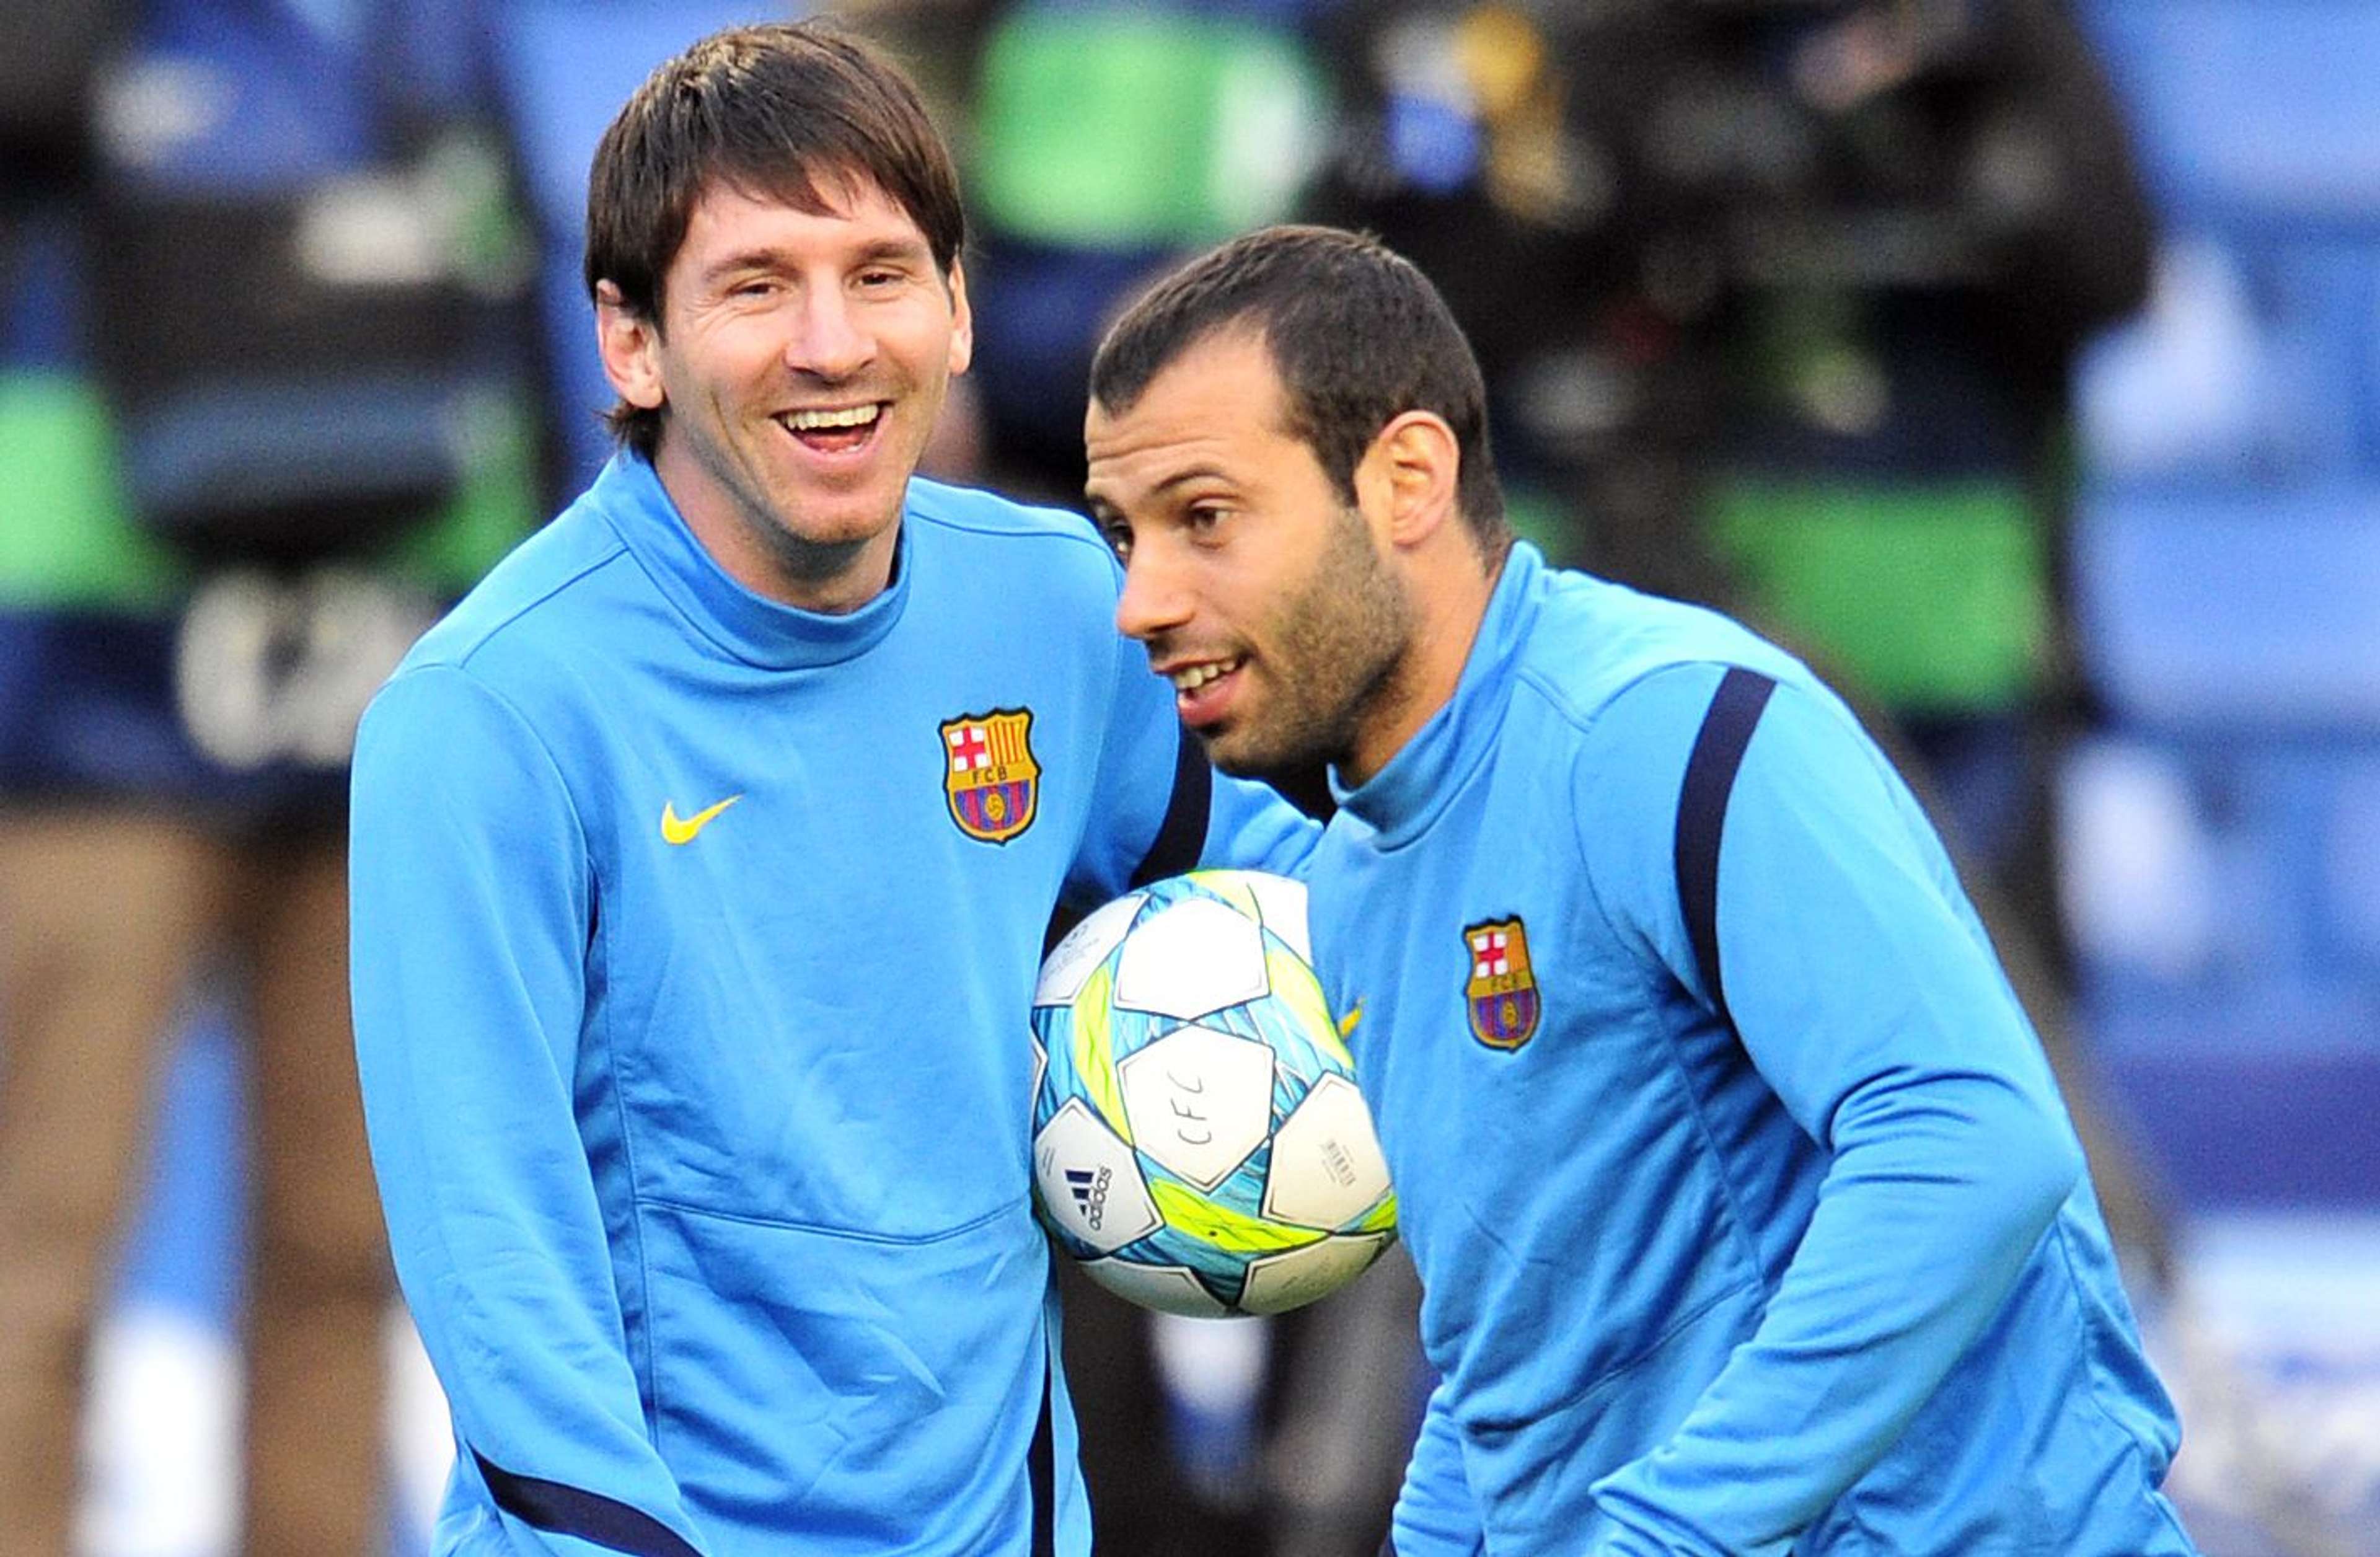 Barcelona's Lionel Messi and Javier Mascherano